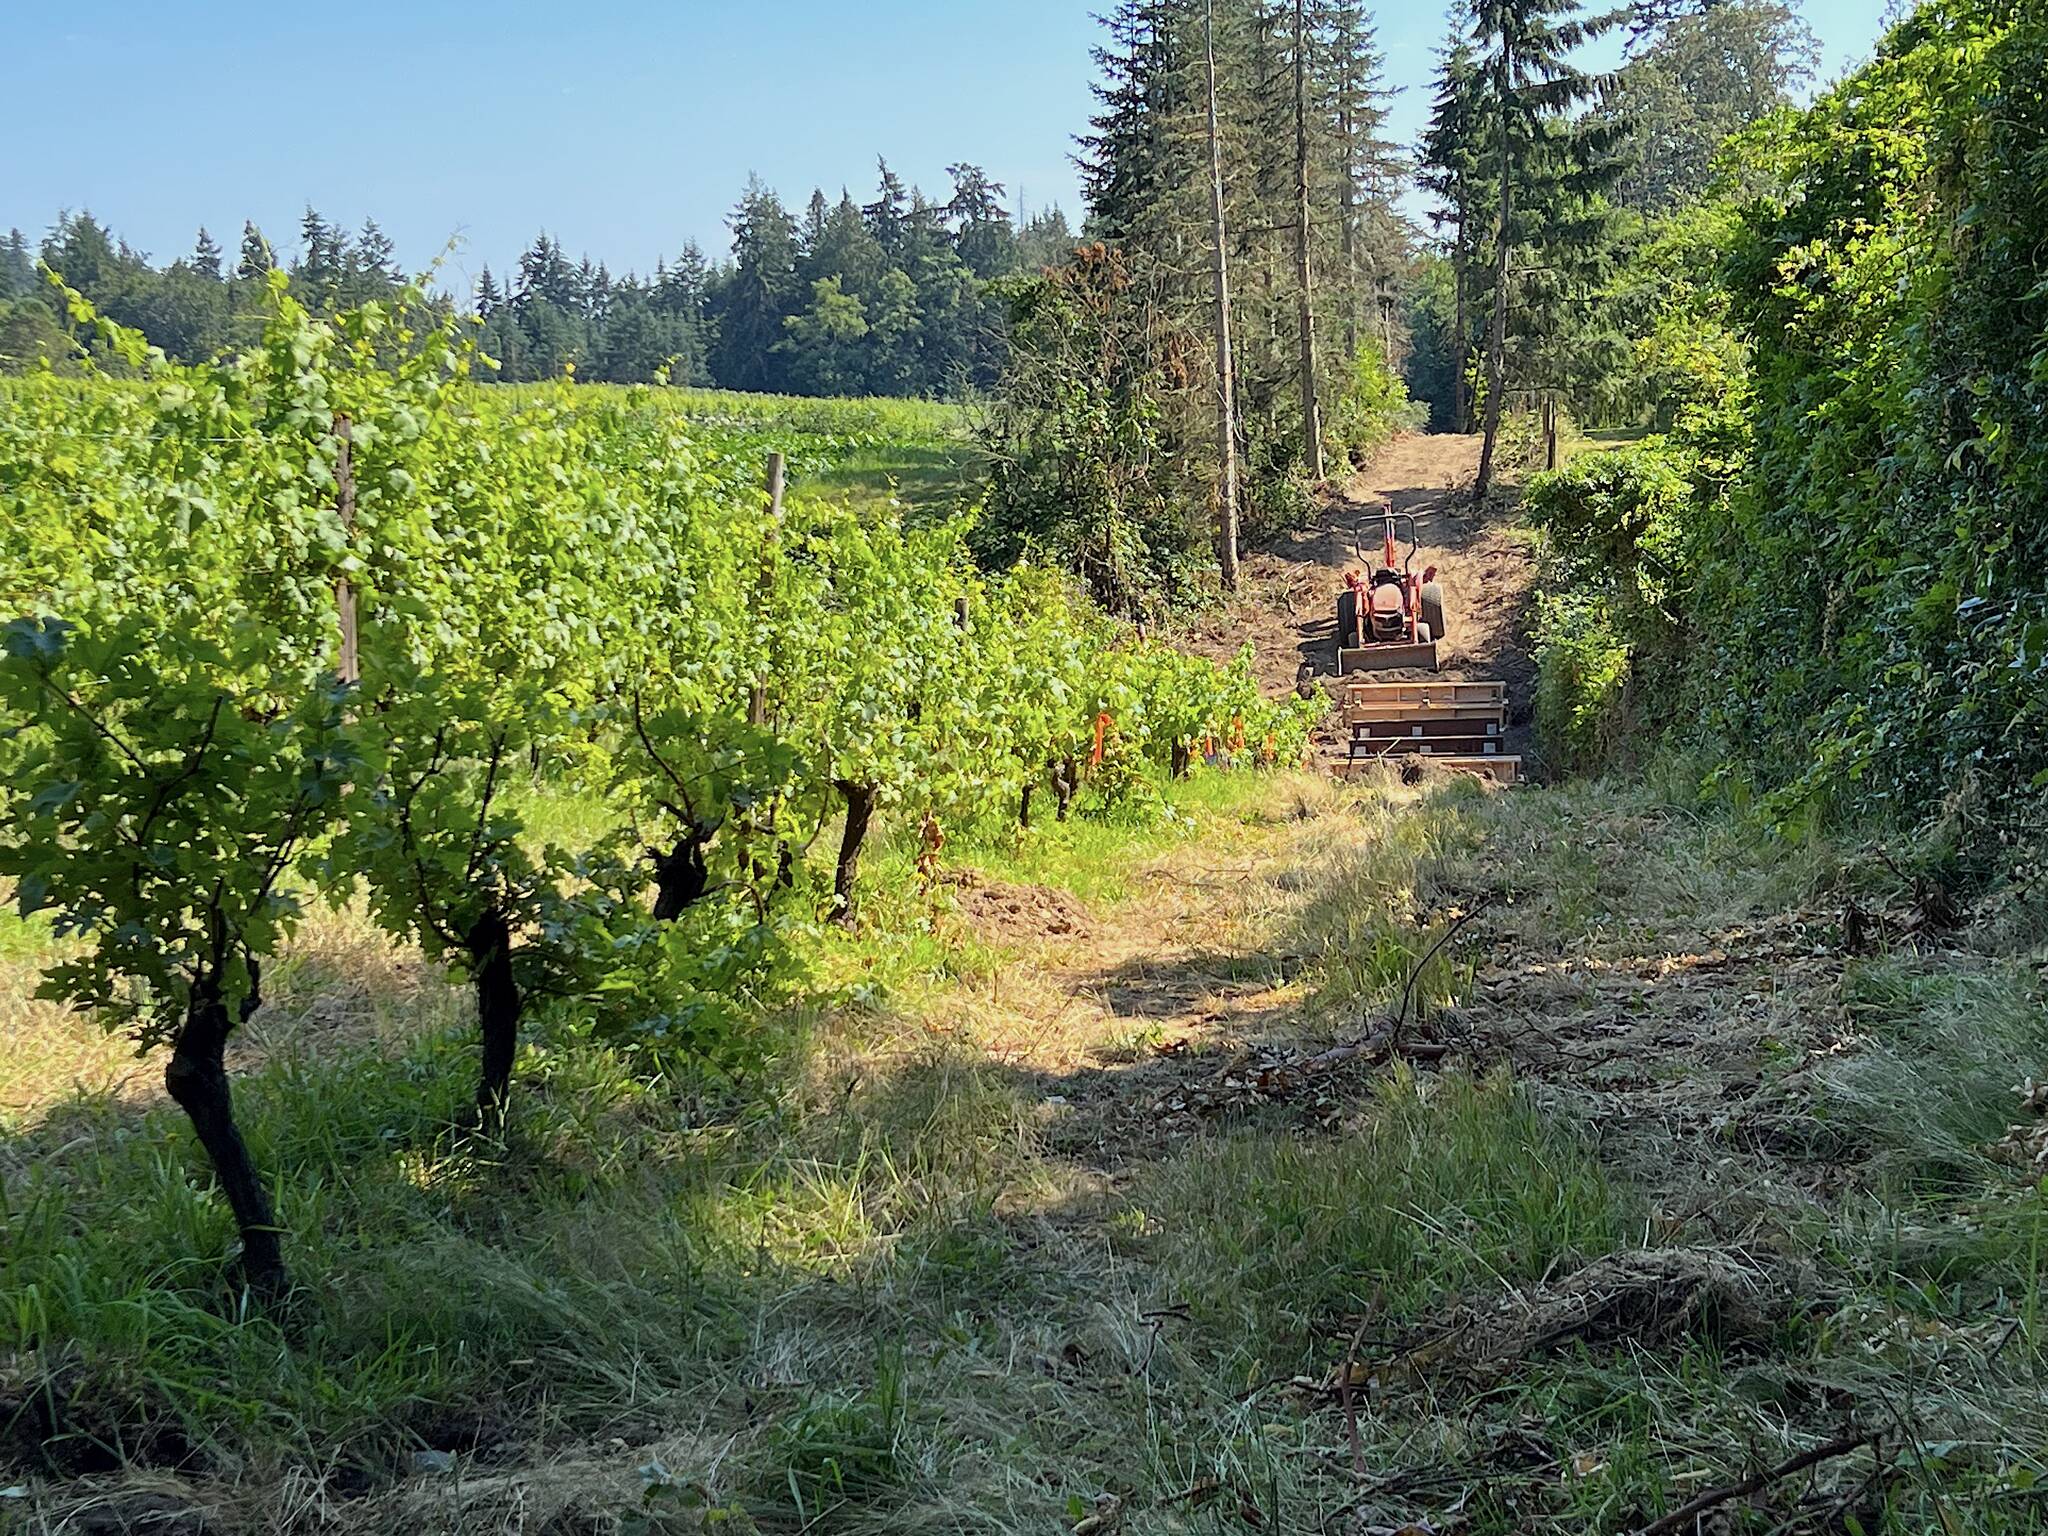 A tractor on the Farm Trail adjacent to the Suyematsu Farm grape vines.